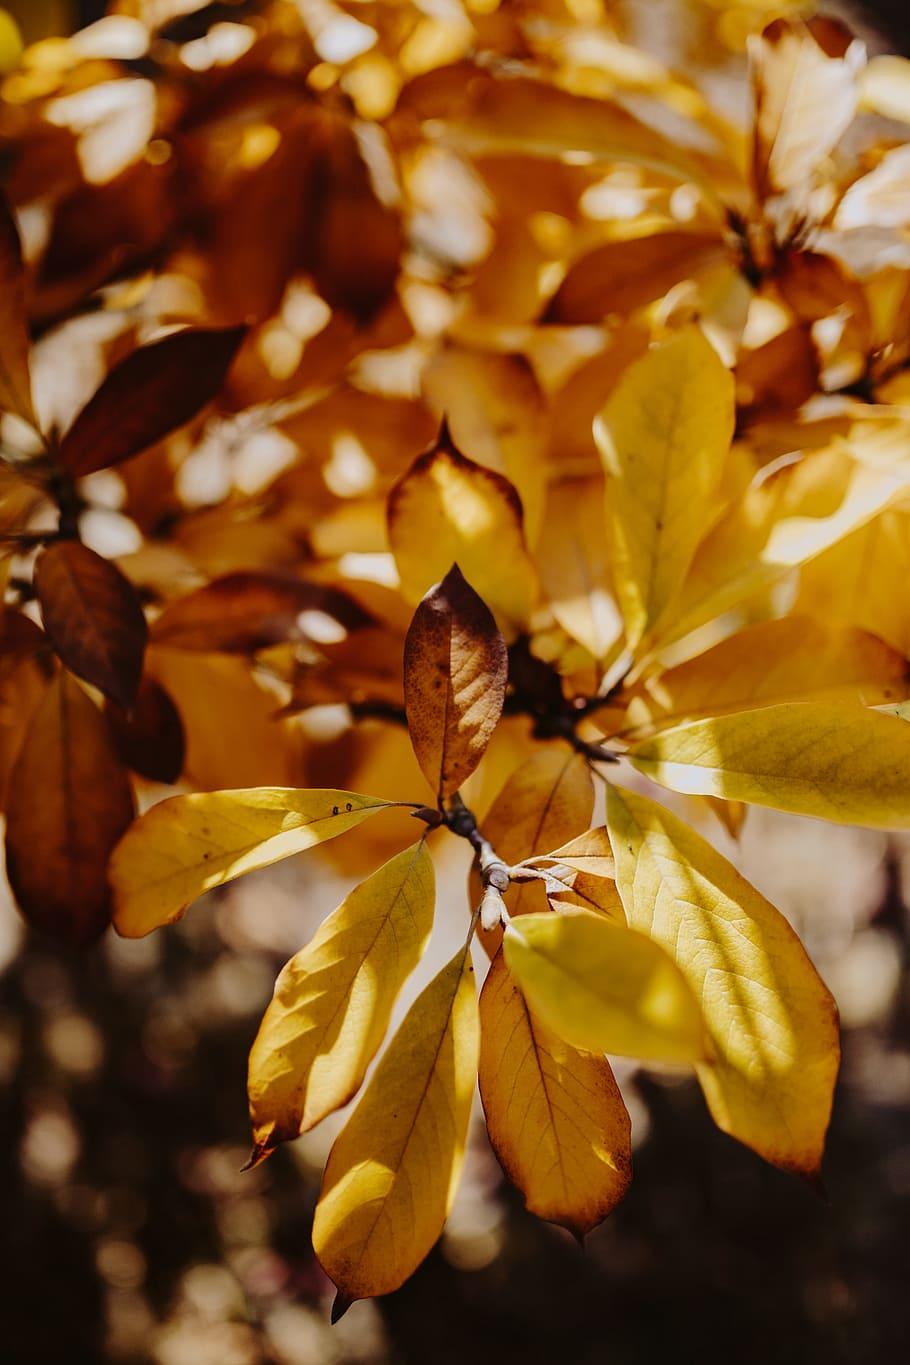 HD wallpaper: Yellow leaves of magnolia in autumn, orange, fall, nature, leaf